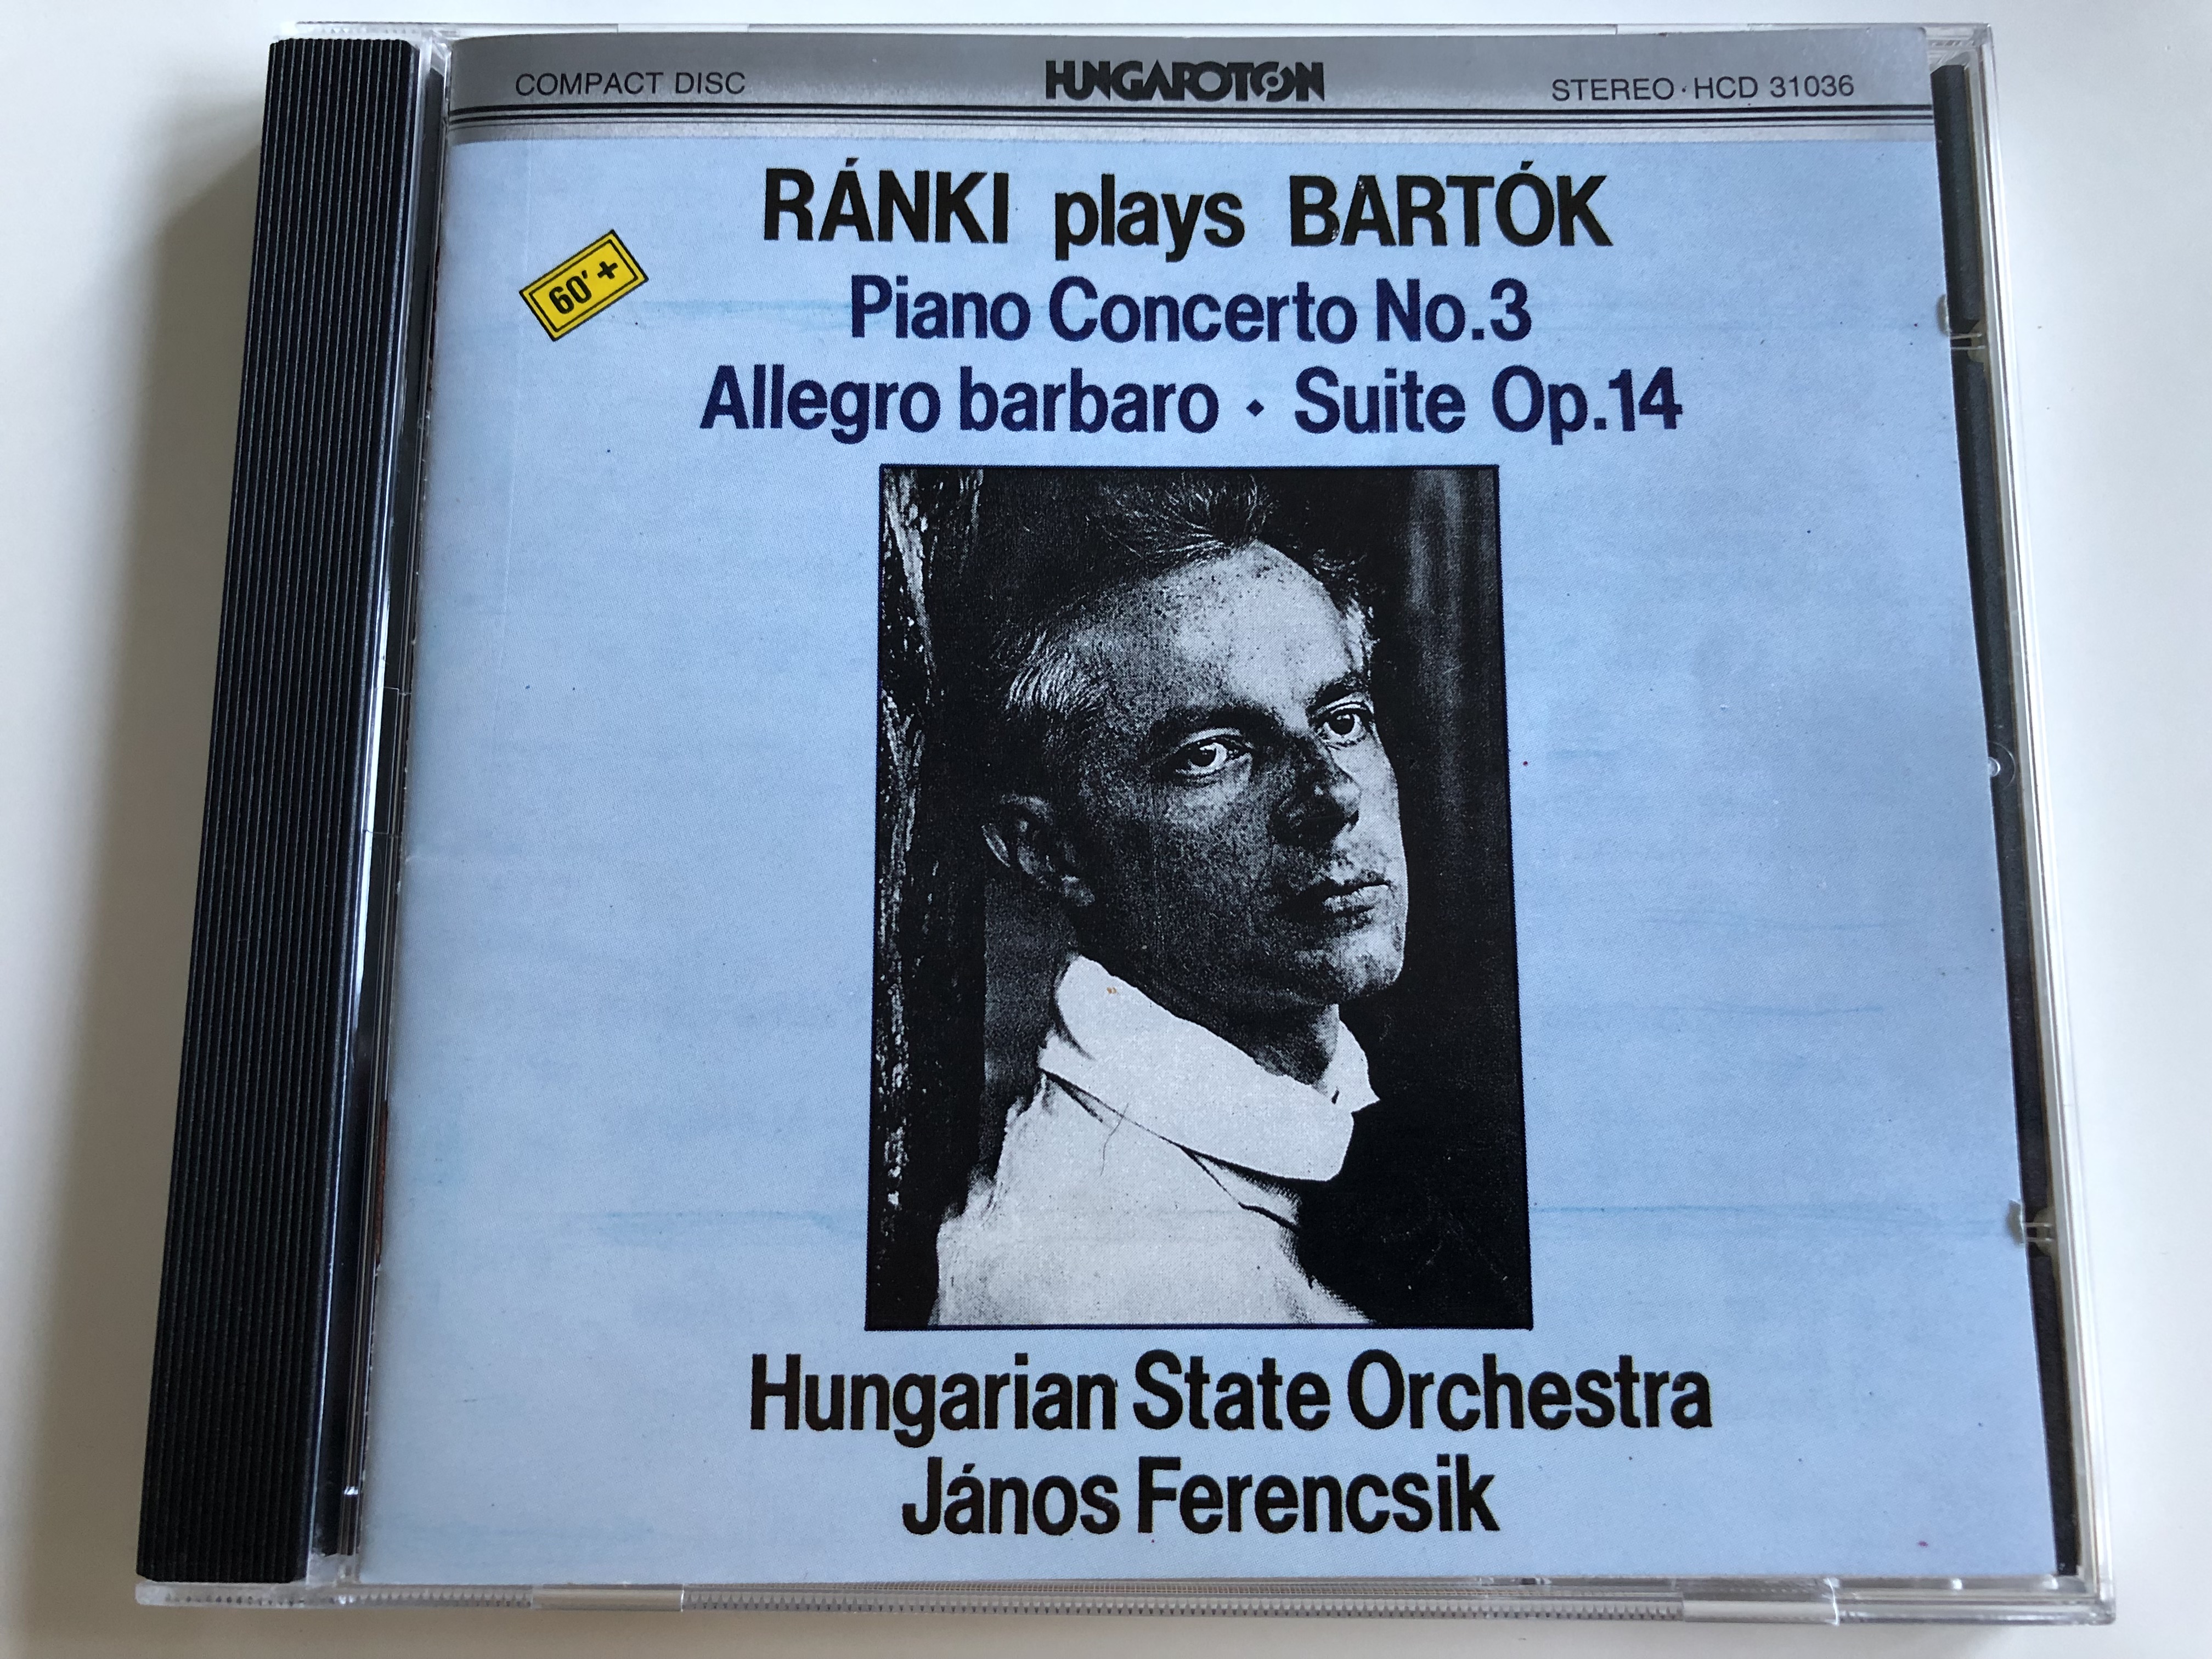 r-nki-plays-bart-k-piano-concerto-no.-3-allegro-barbaro-suite-op.14-hungarian-state-orchestra-j-nos-ferencsik-hungaroton-audio-cd-1988-hcd-31036-1-.jpg